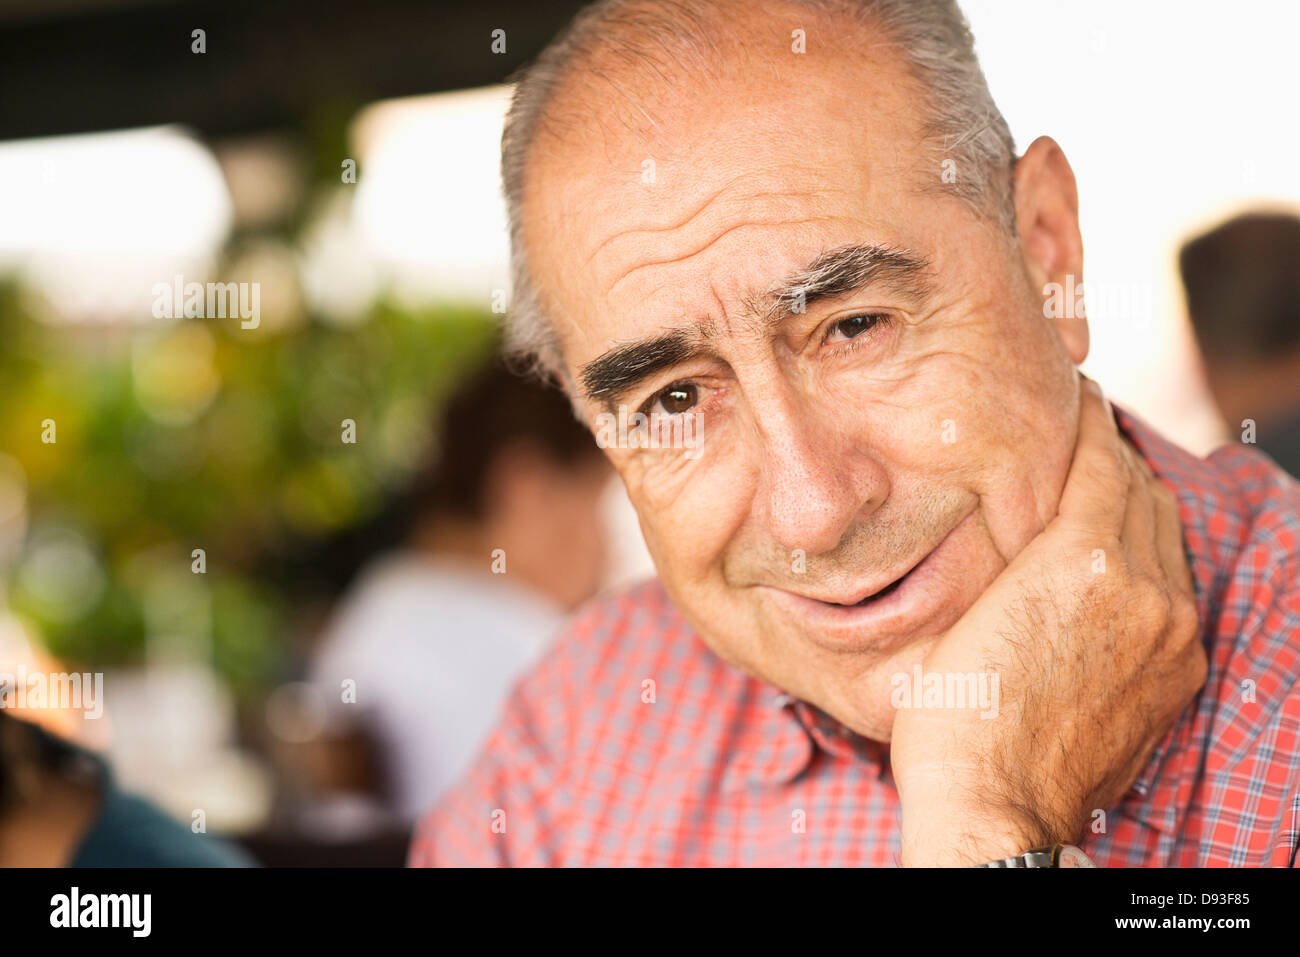 Hispanic man smiling Stock Photo